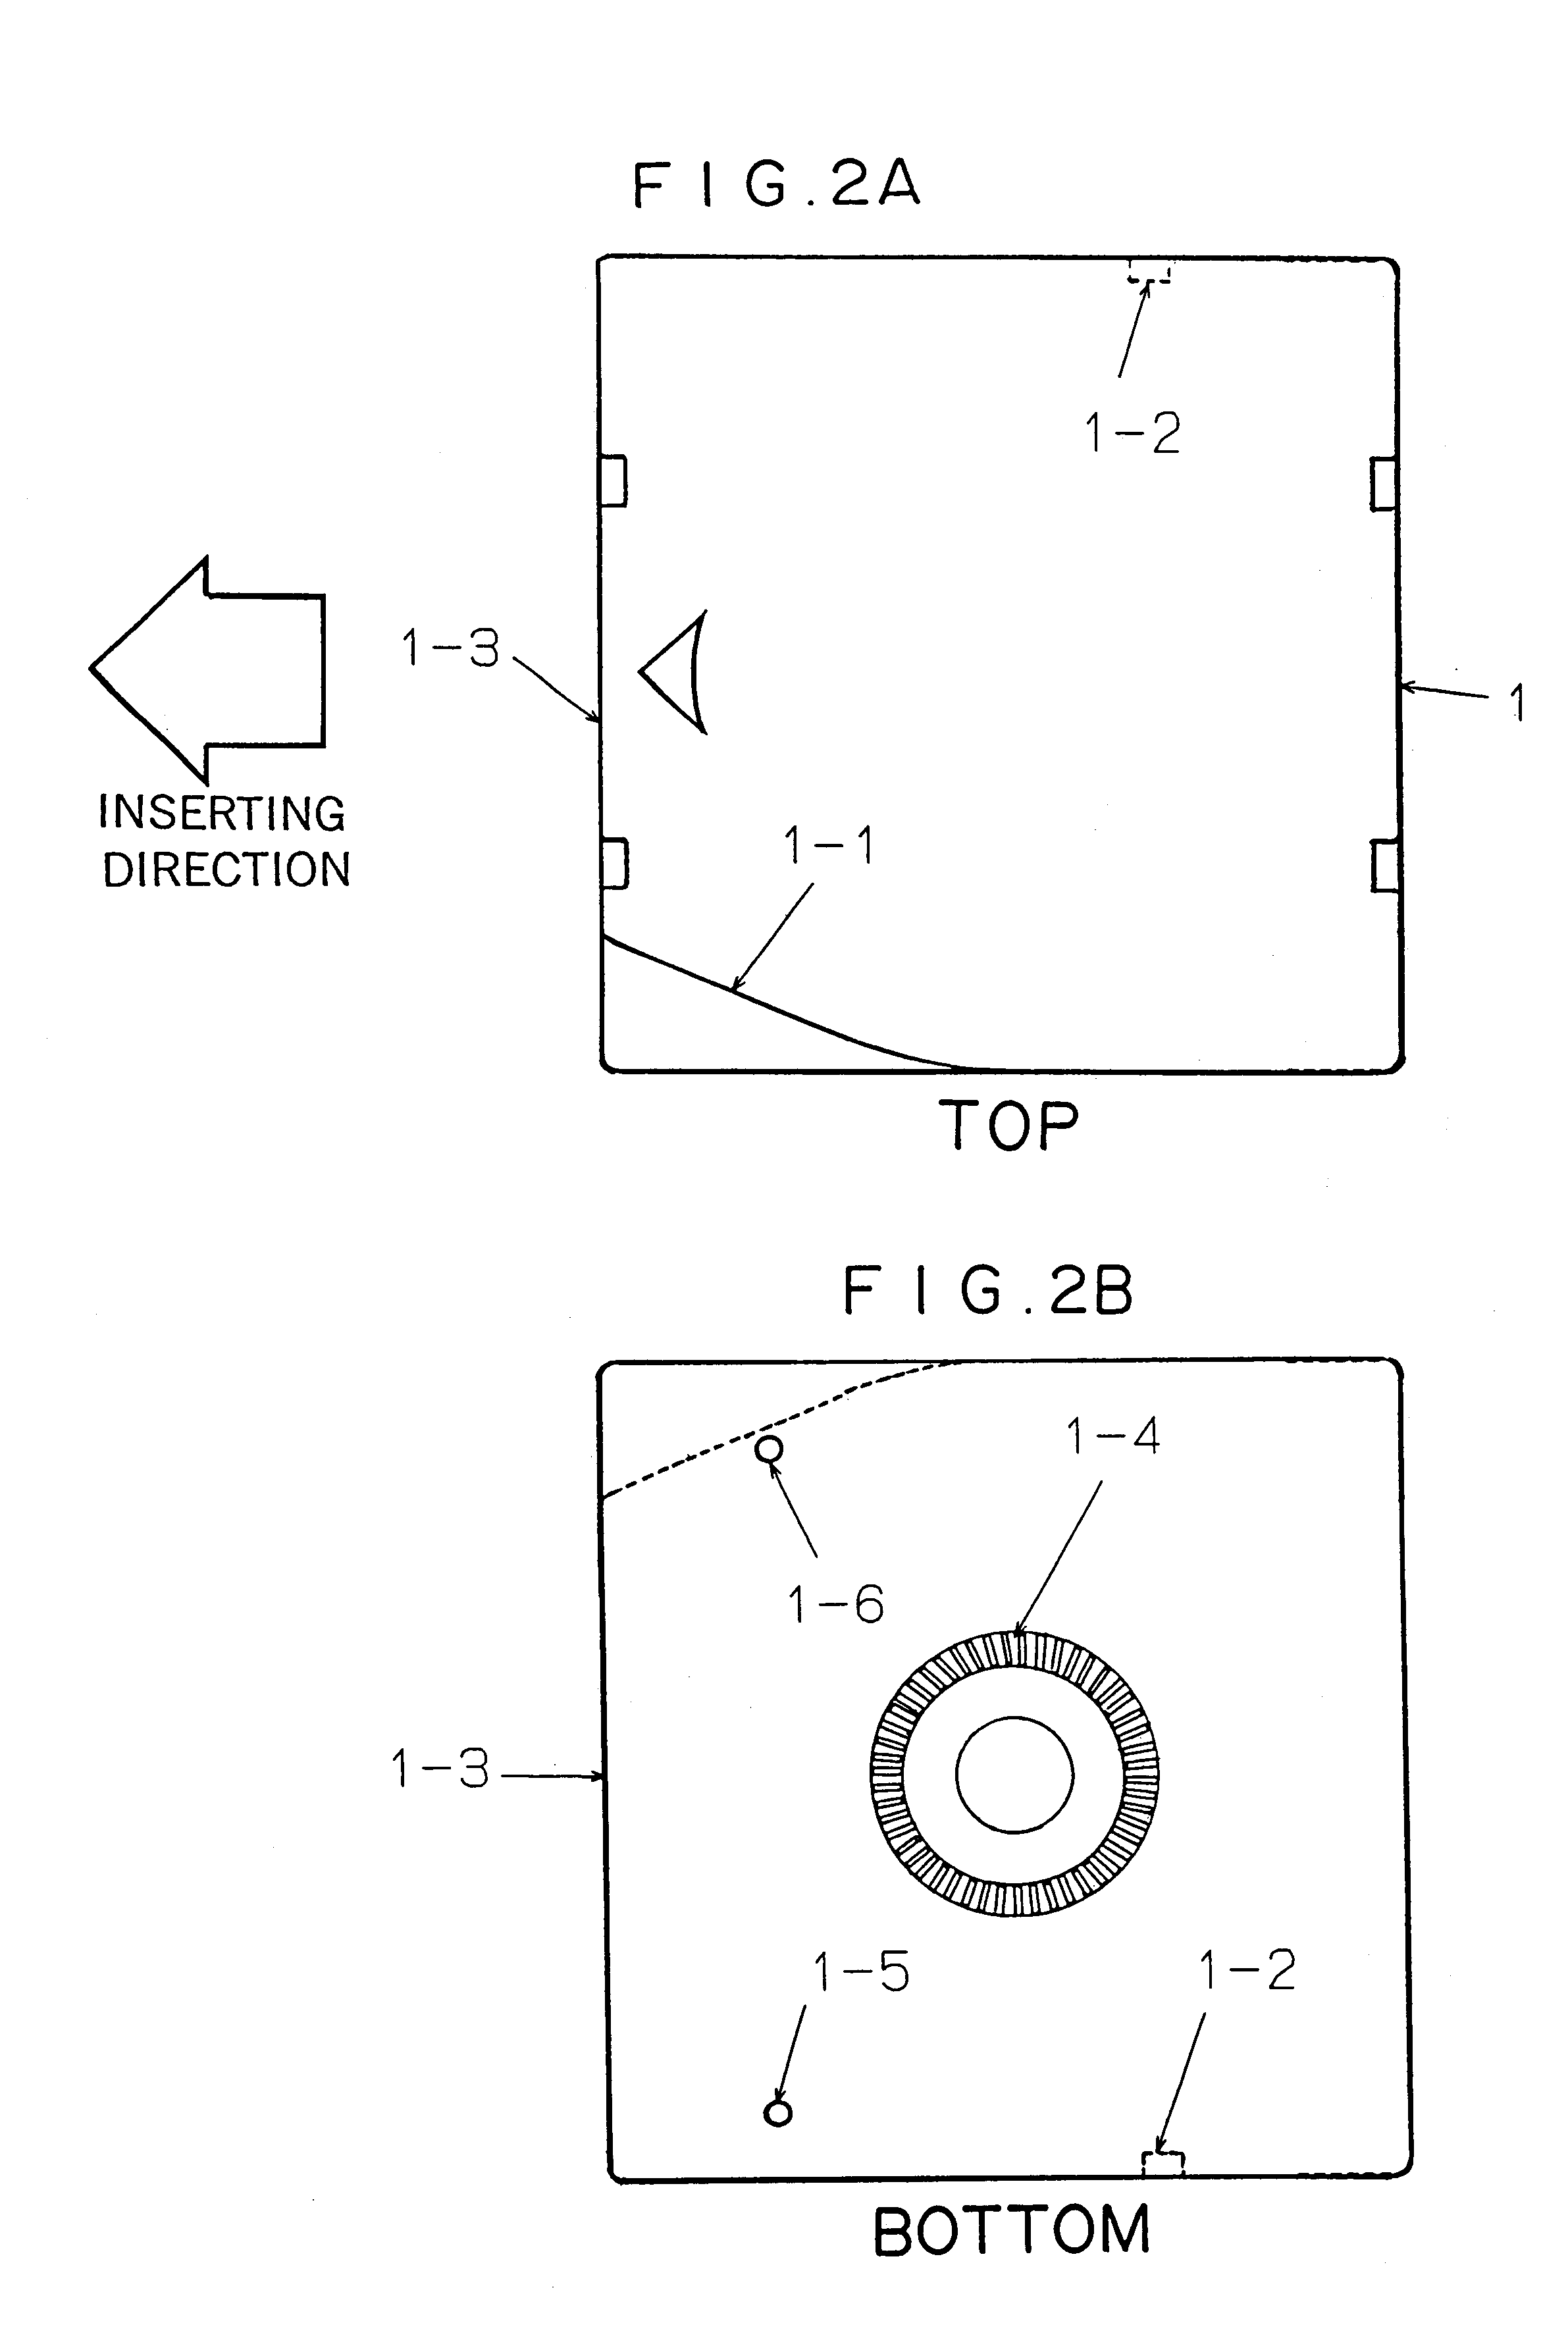 Cartridge mis-insertion preventing mechanism